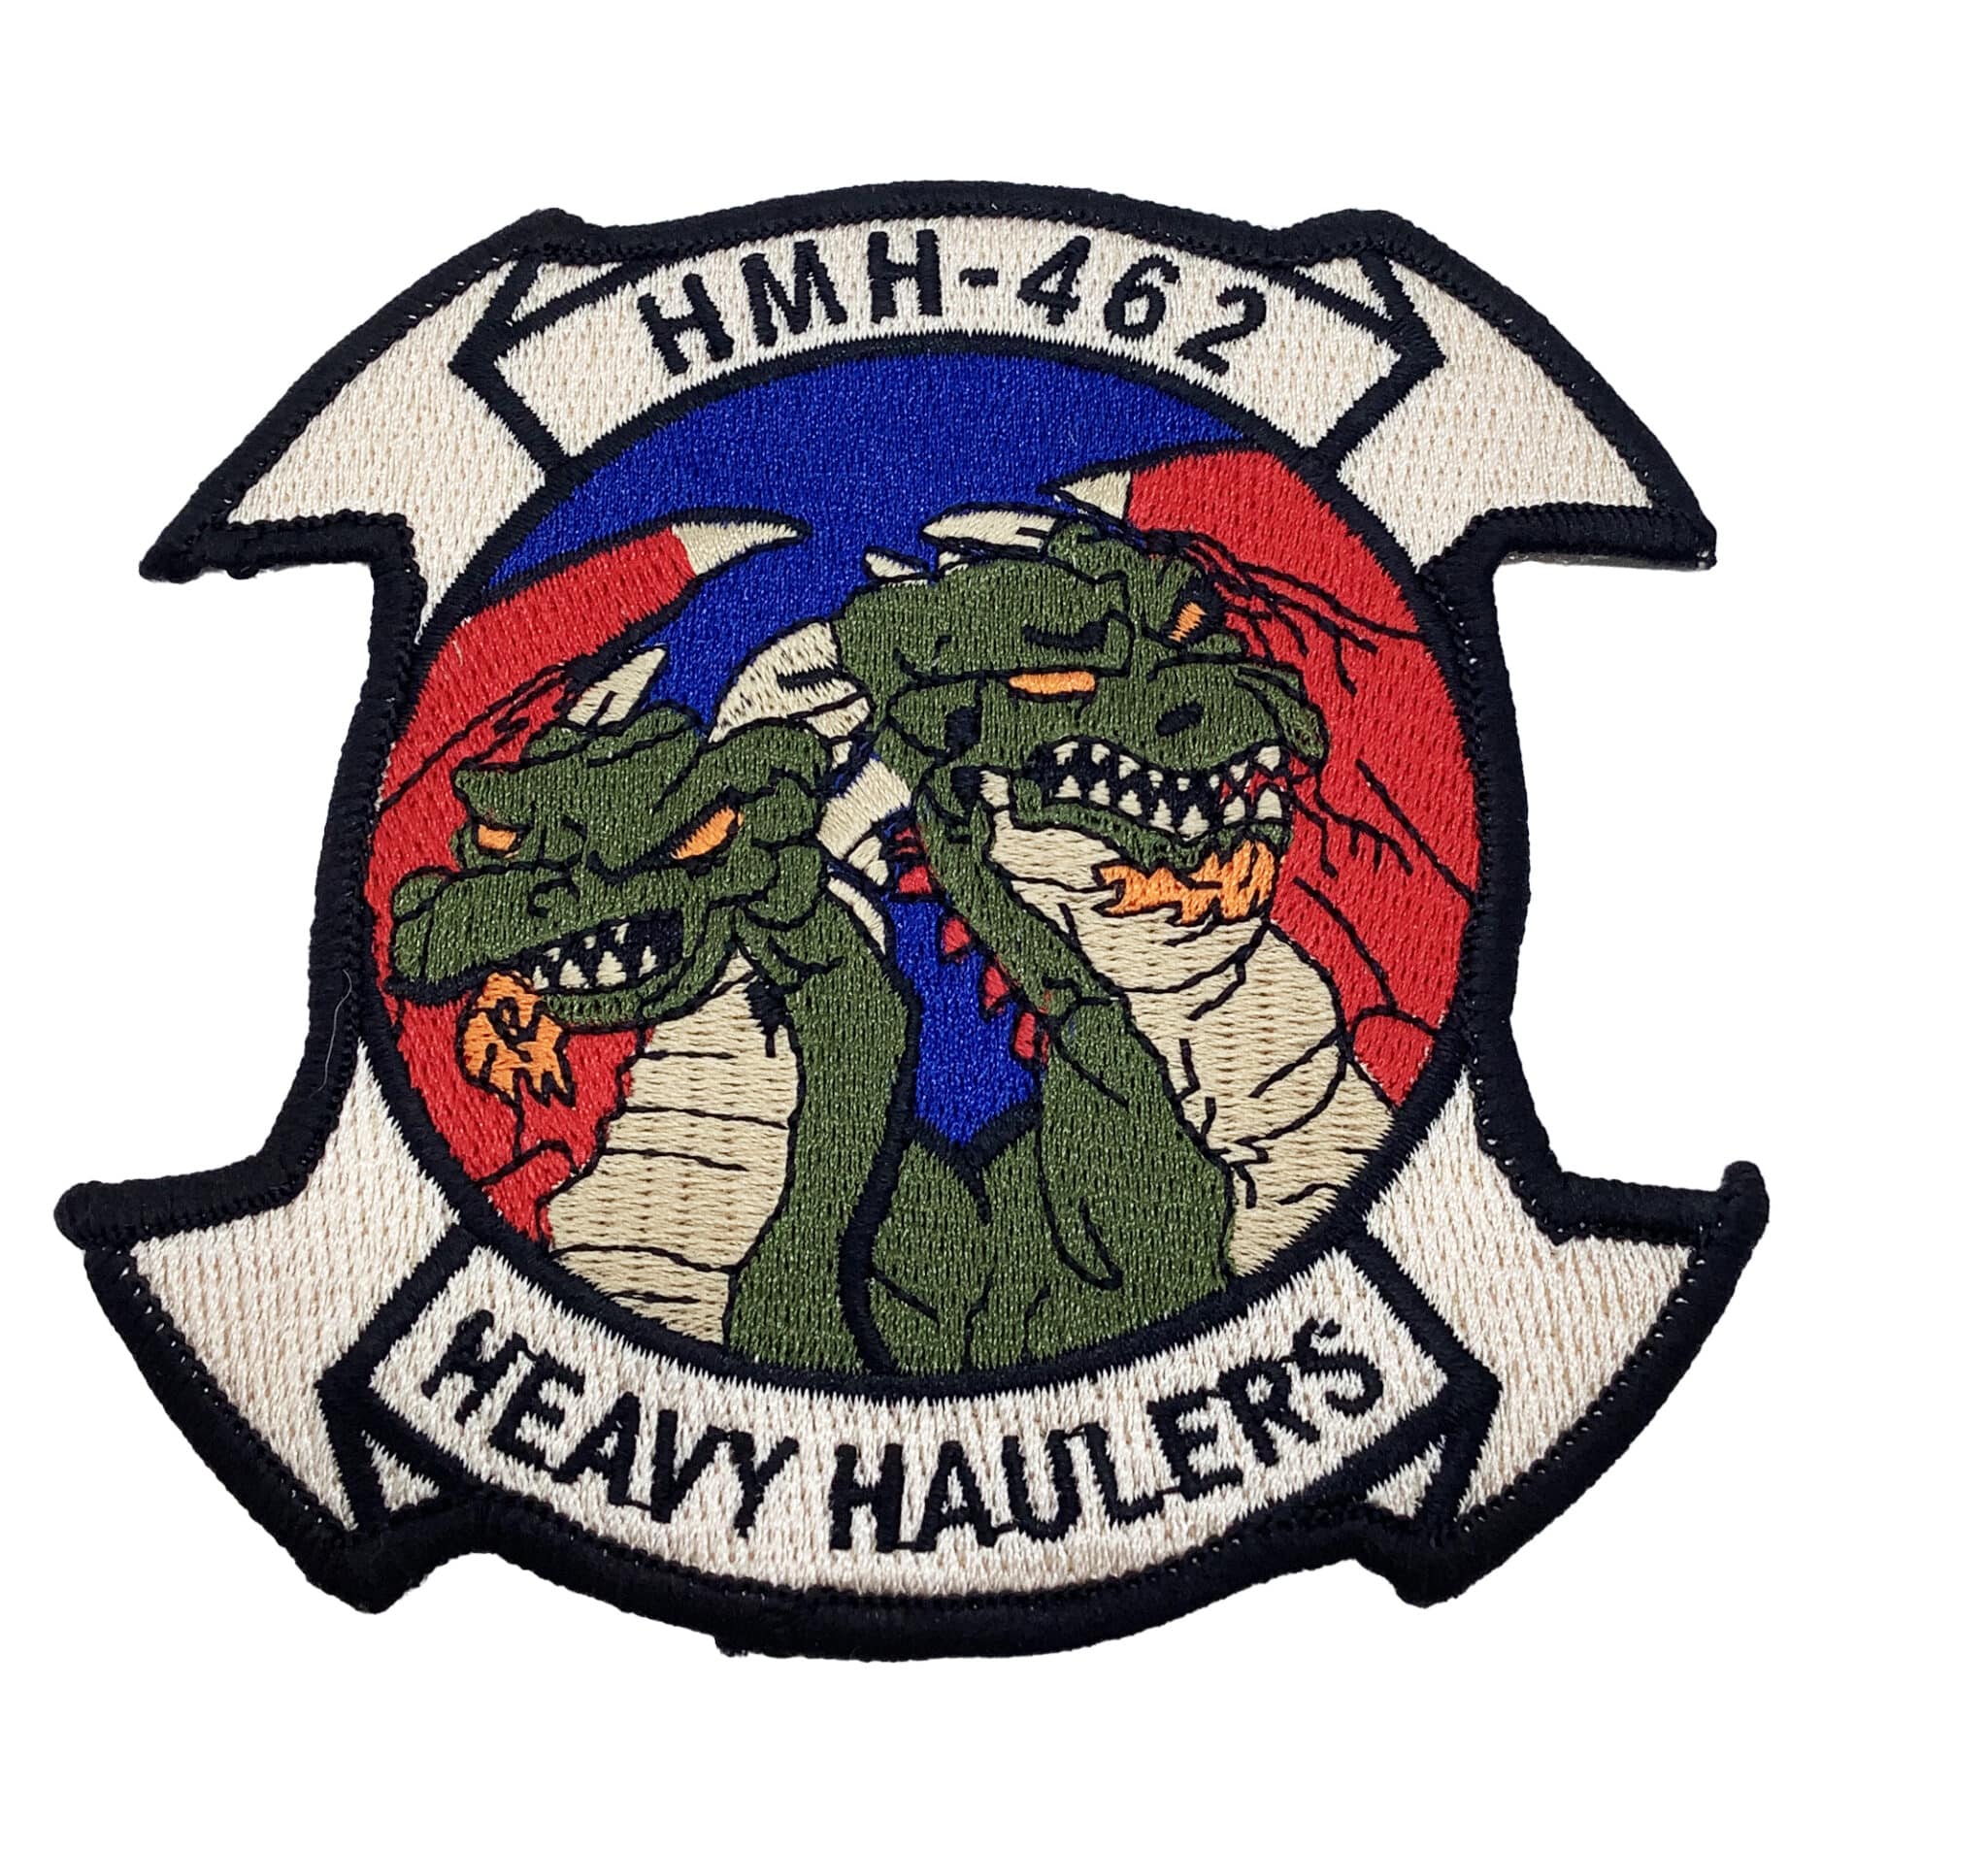 HMH-462 Heavy Haulers Patch – Hook and Loop